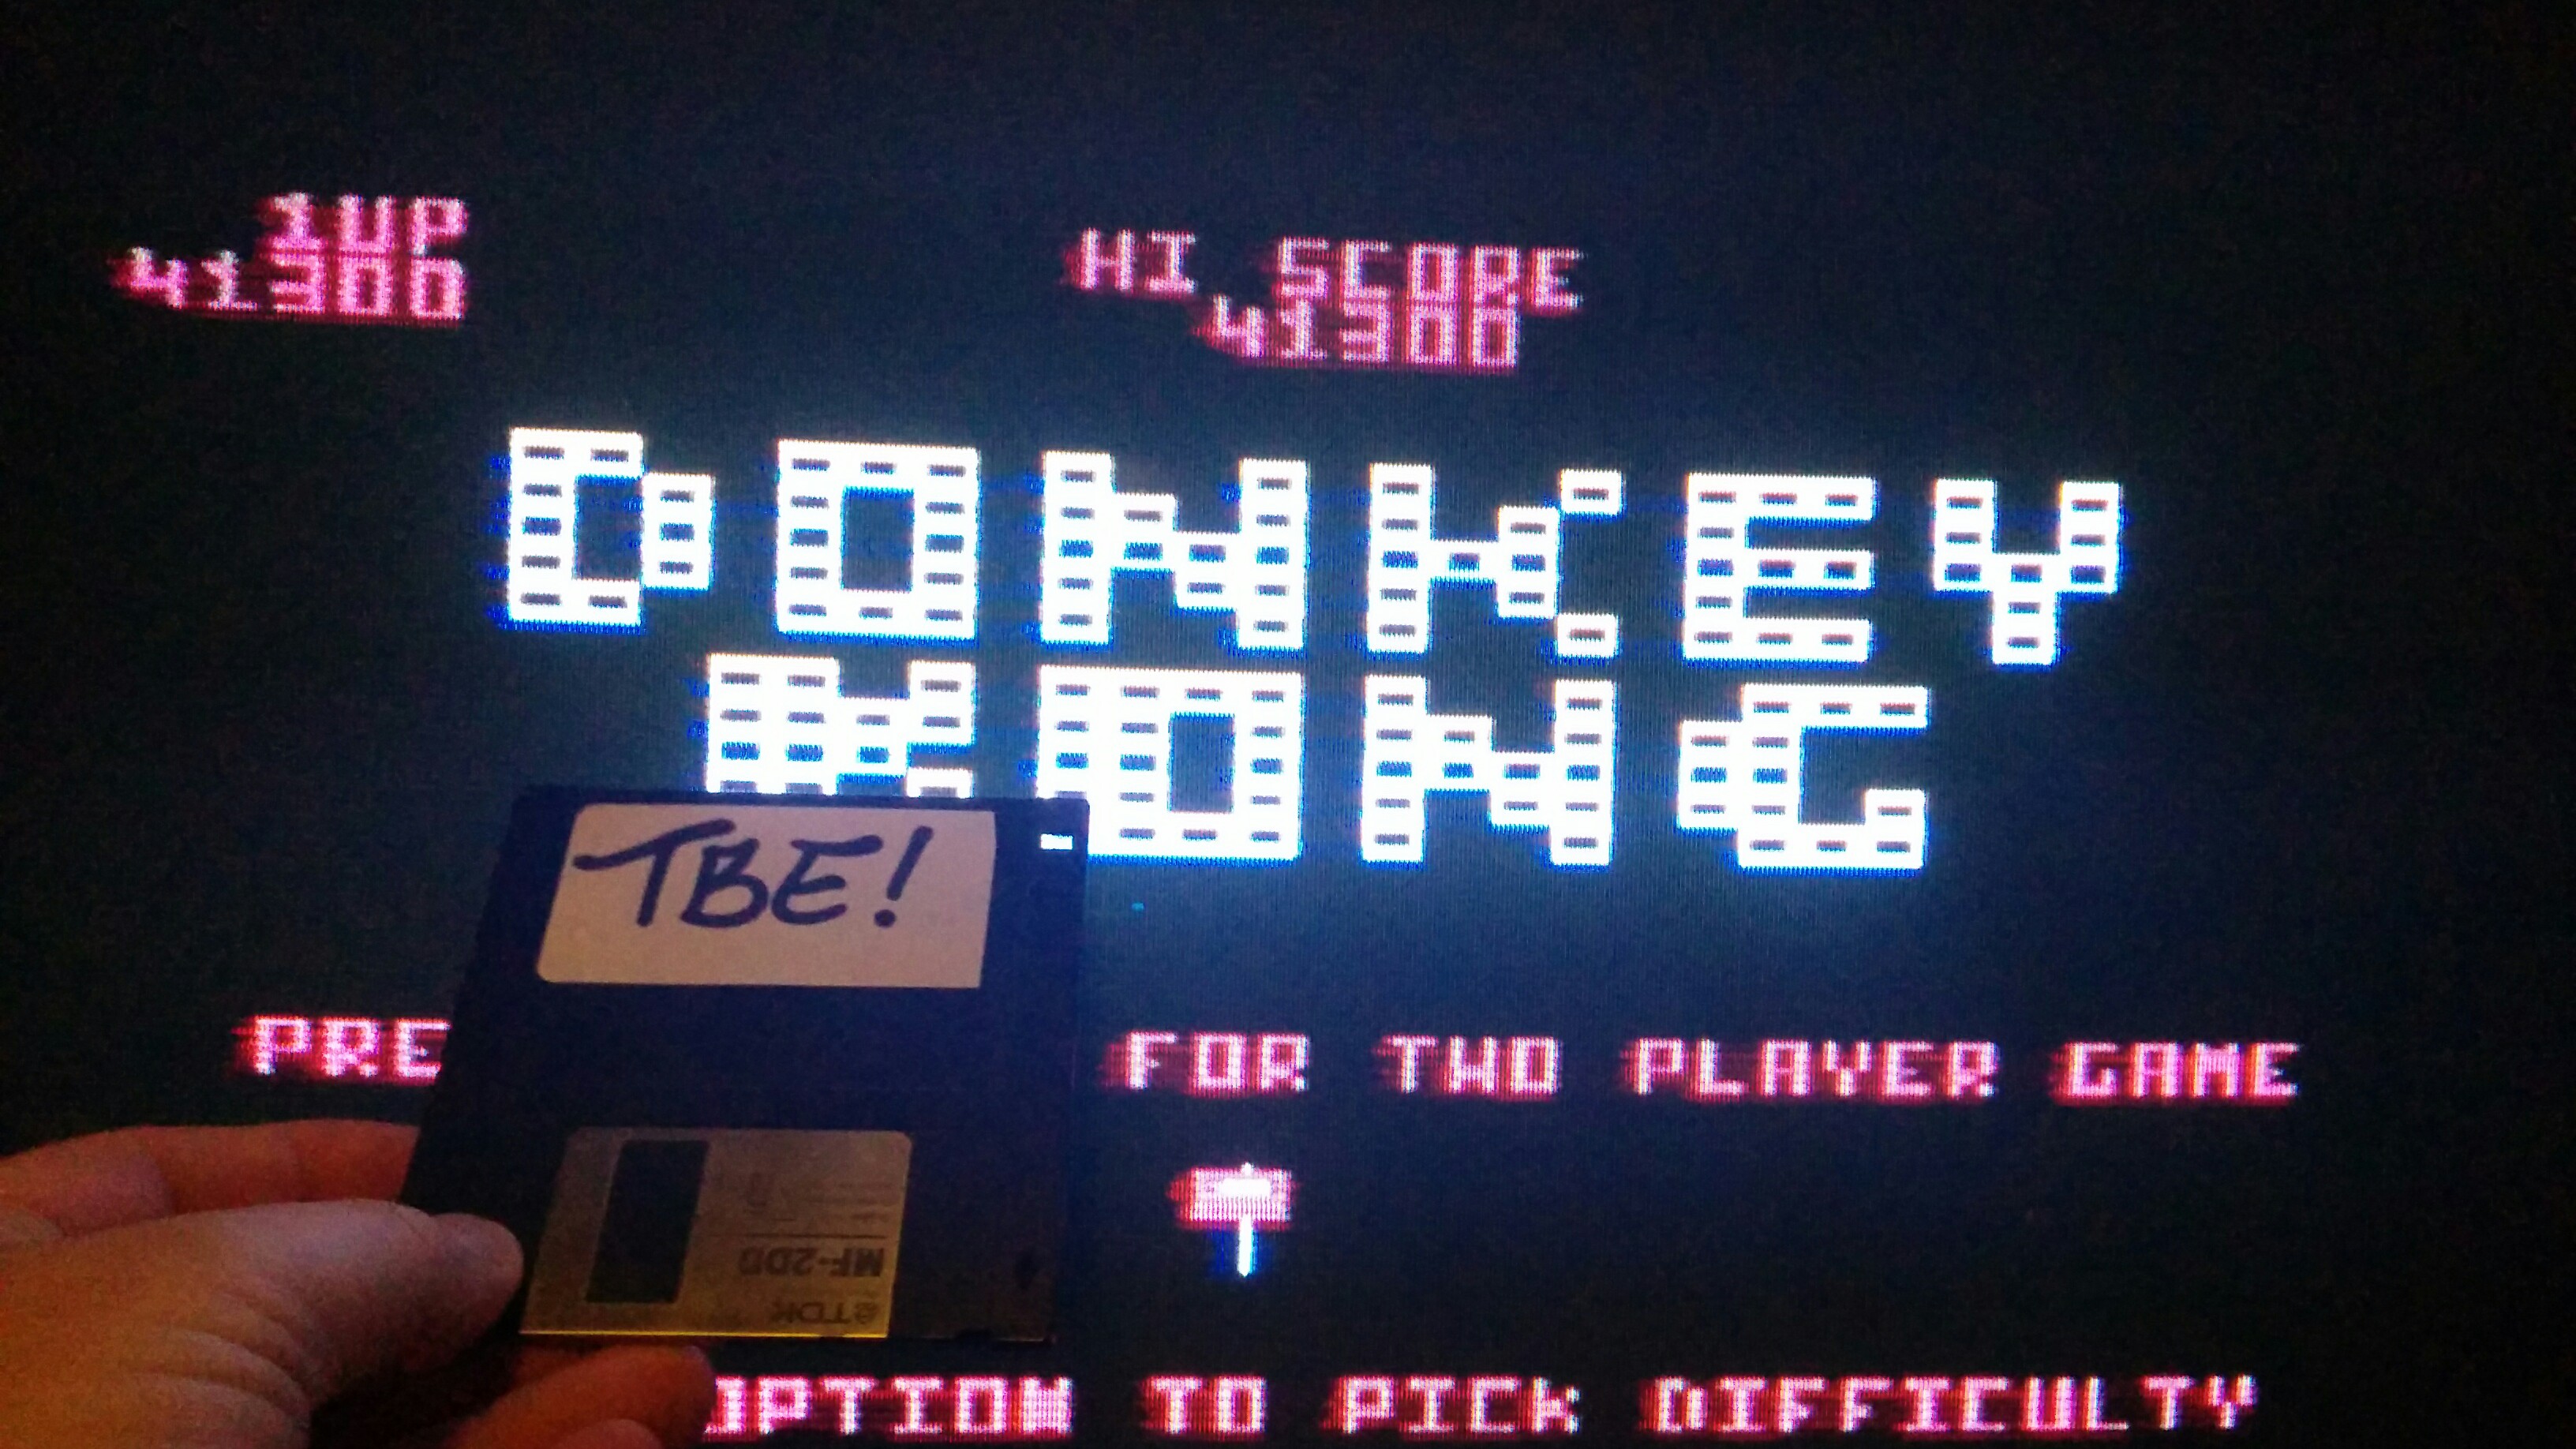 Sixx: Donkey Kong [Hammer Start] (Atari 400/800/XL/XE Emulated) 41,300 points on 2014-11-14 14:03:46